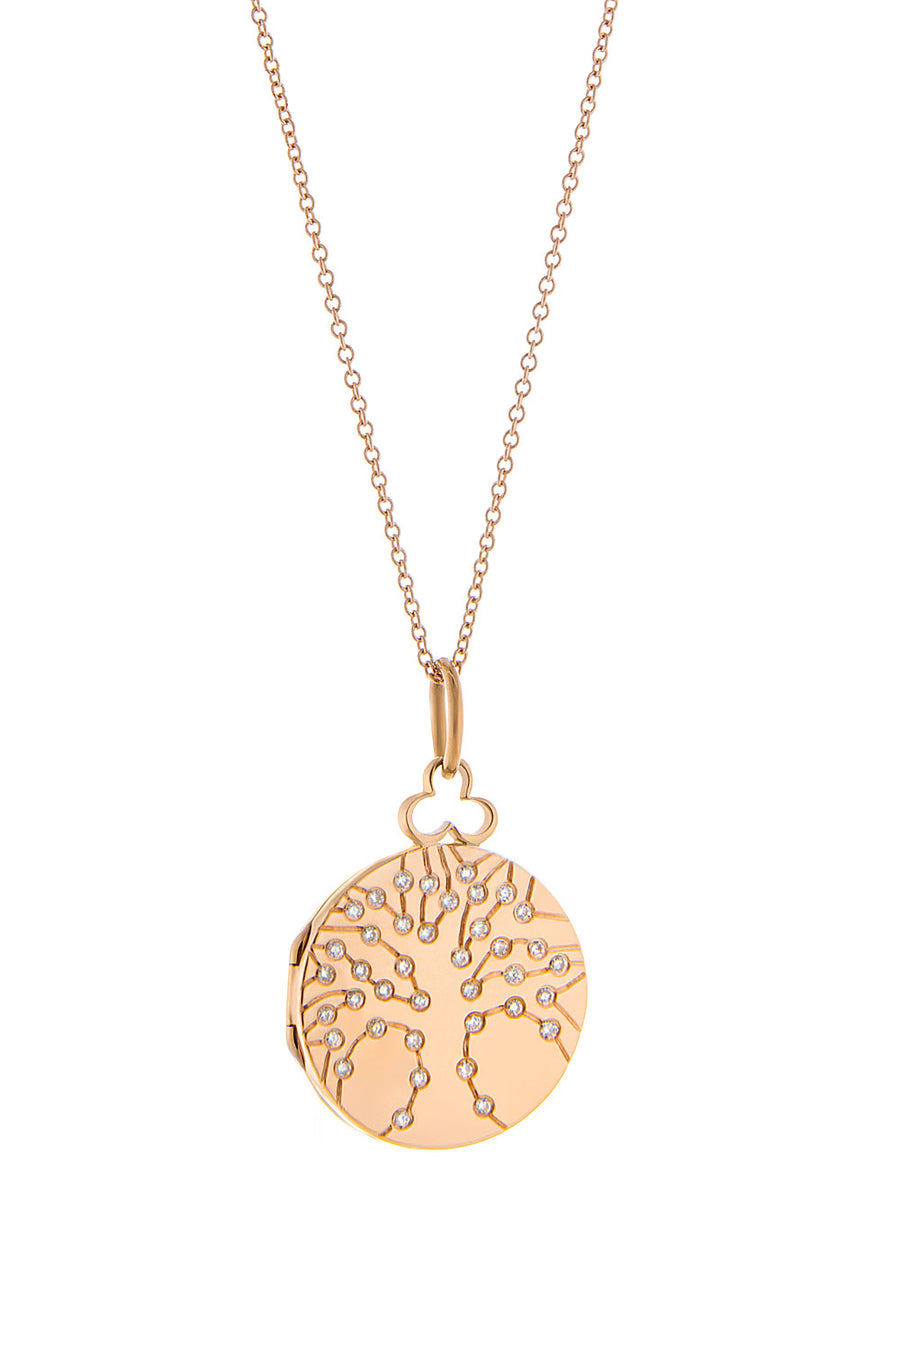 18k gold round locket pendant necklace